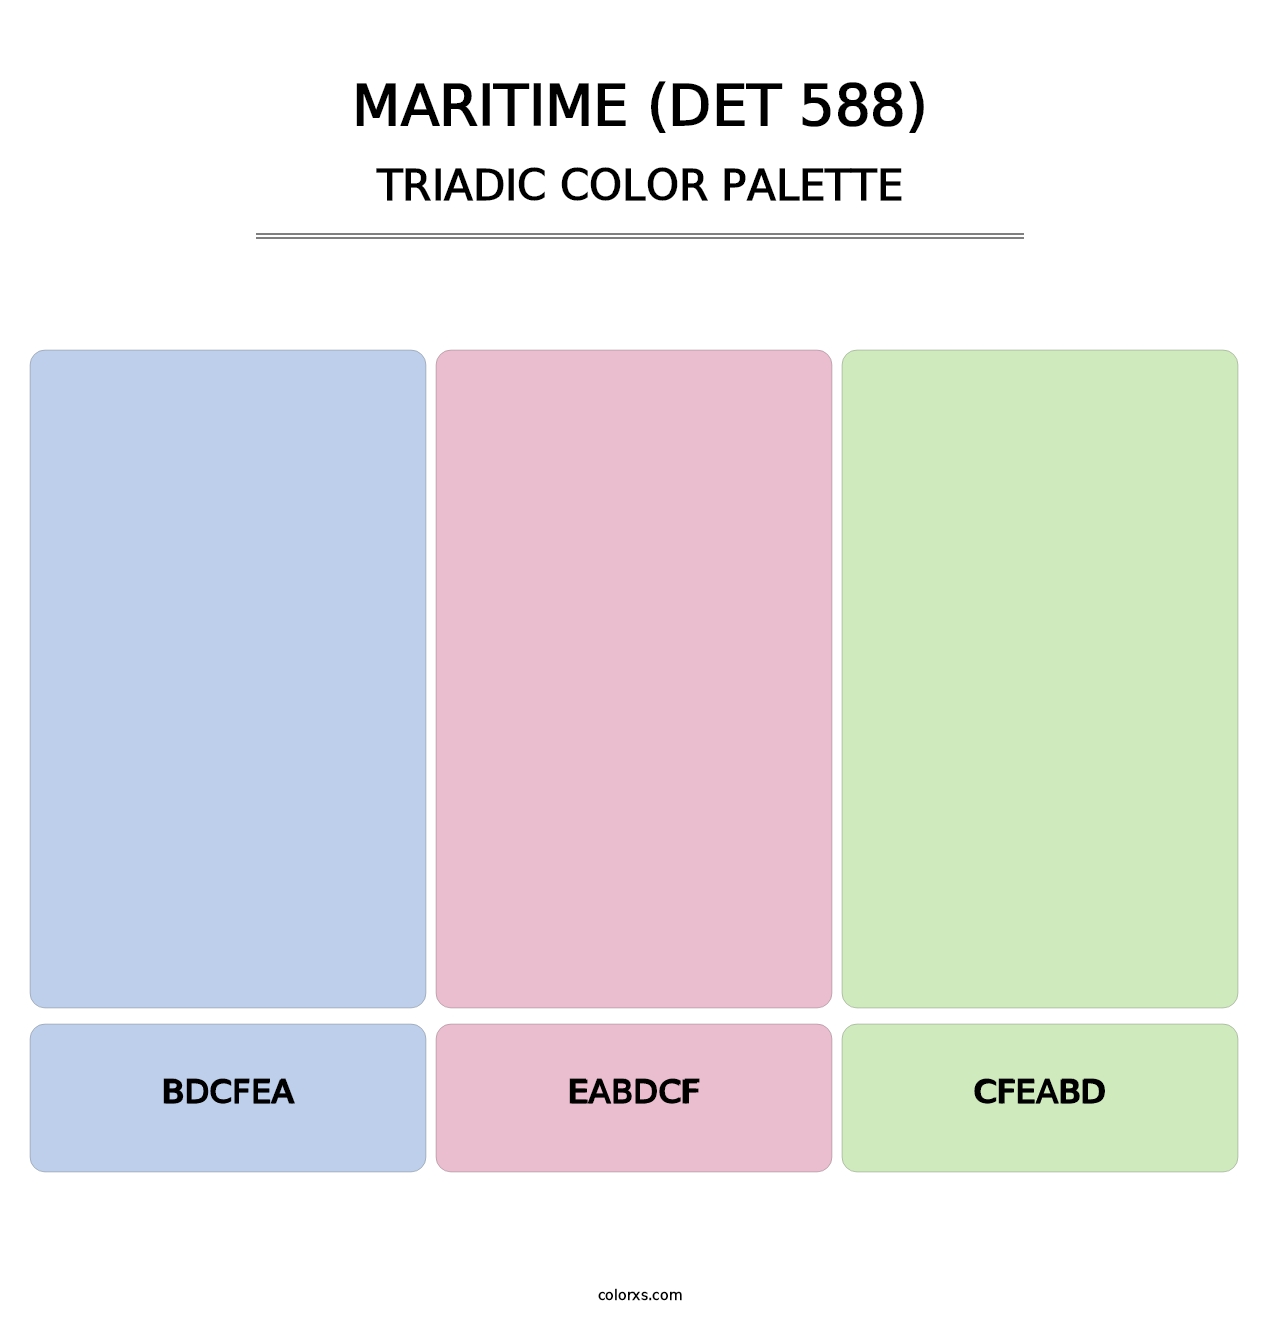 Maritime (DET 588) - Triadic Color Palette